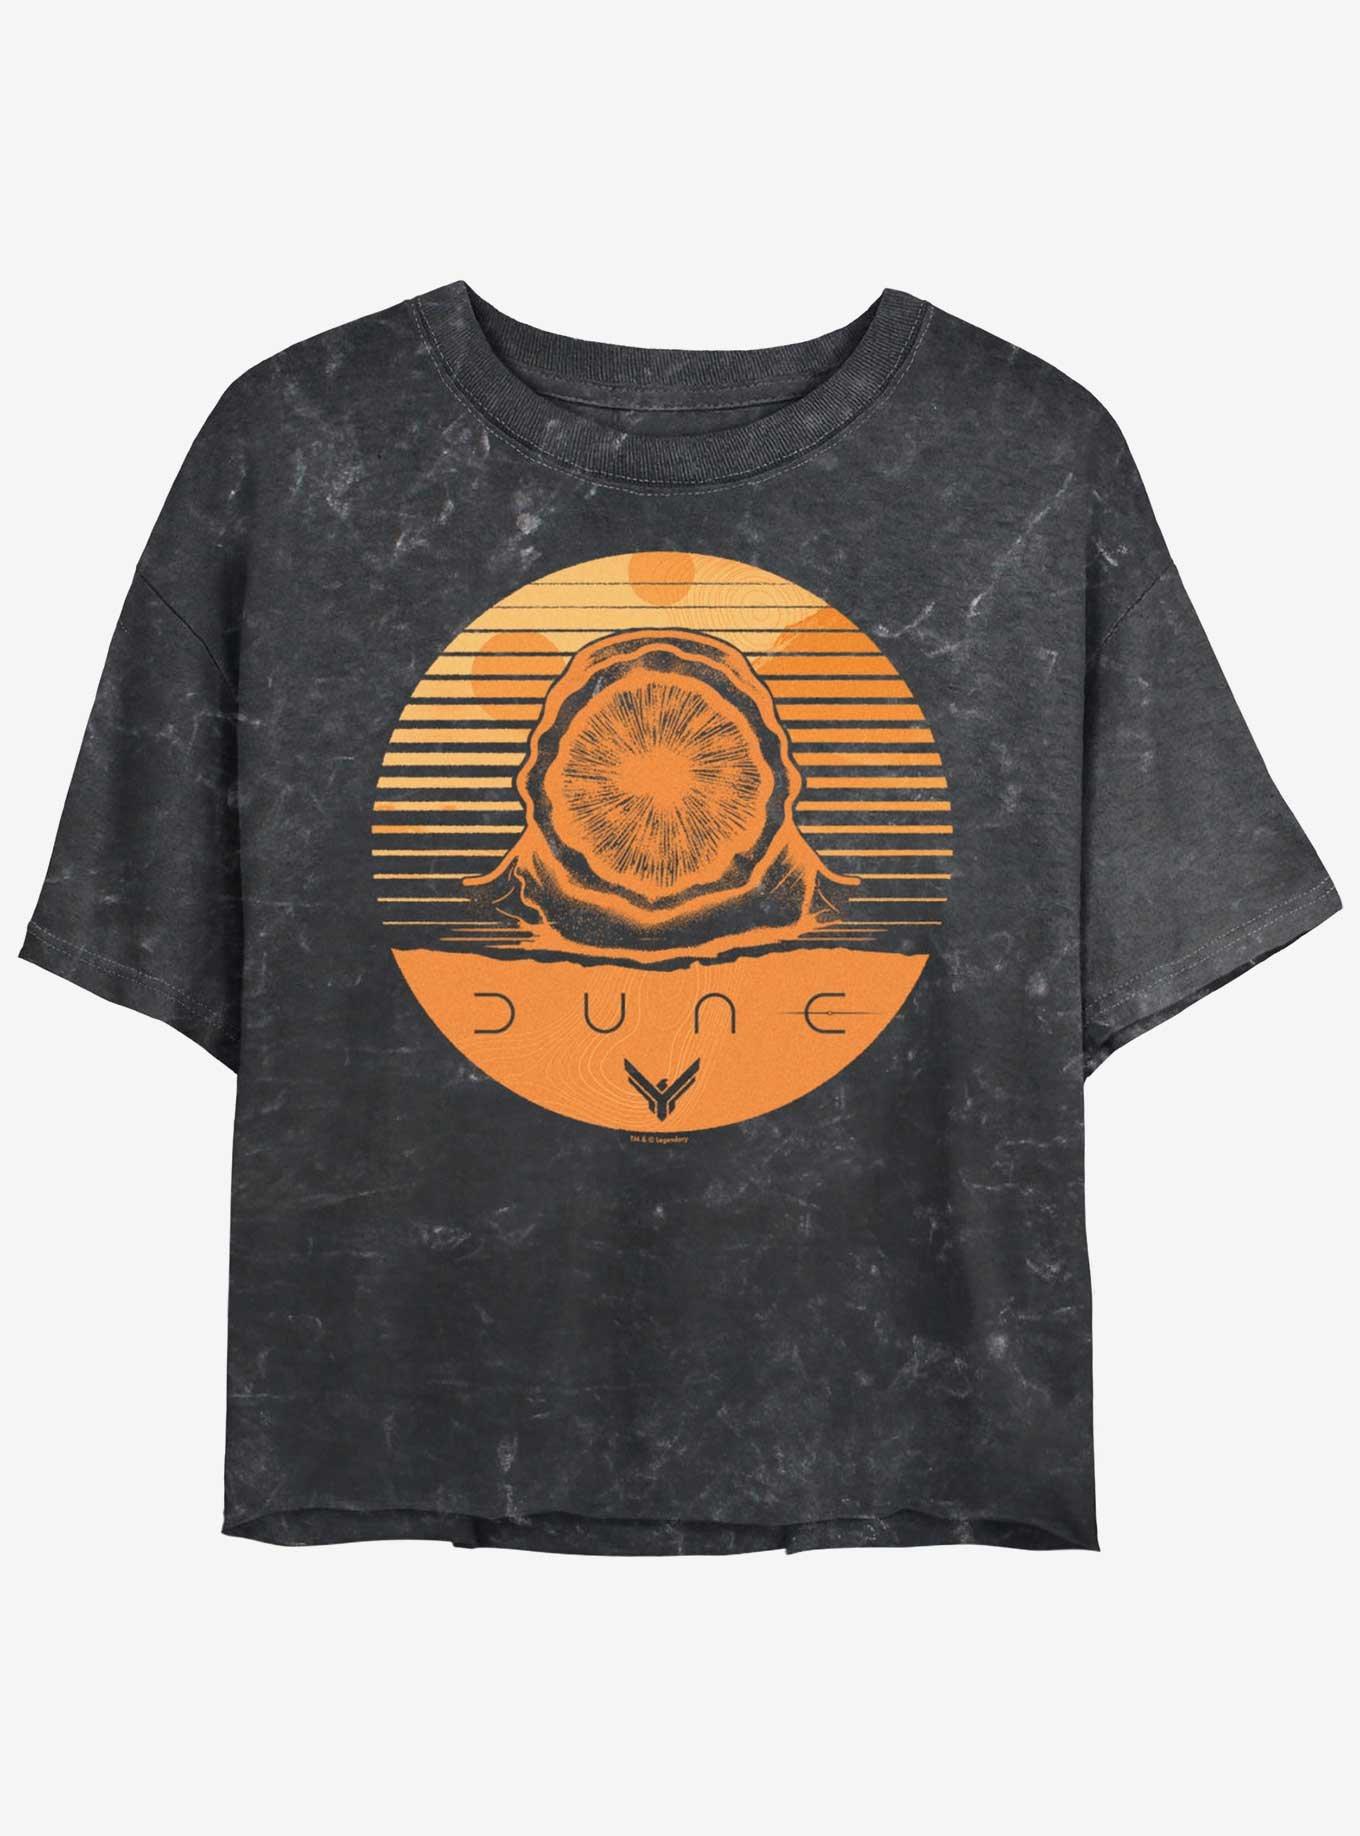 Dune: Part Two Arrakis Sandworm Stamp Mineral Wash Girls Crop T-Shirt, BLACK, hi-res